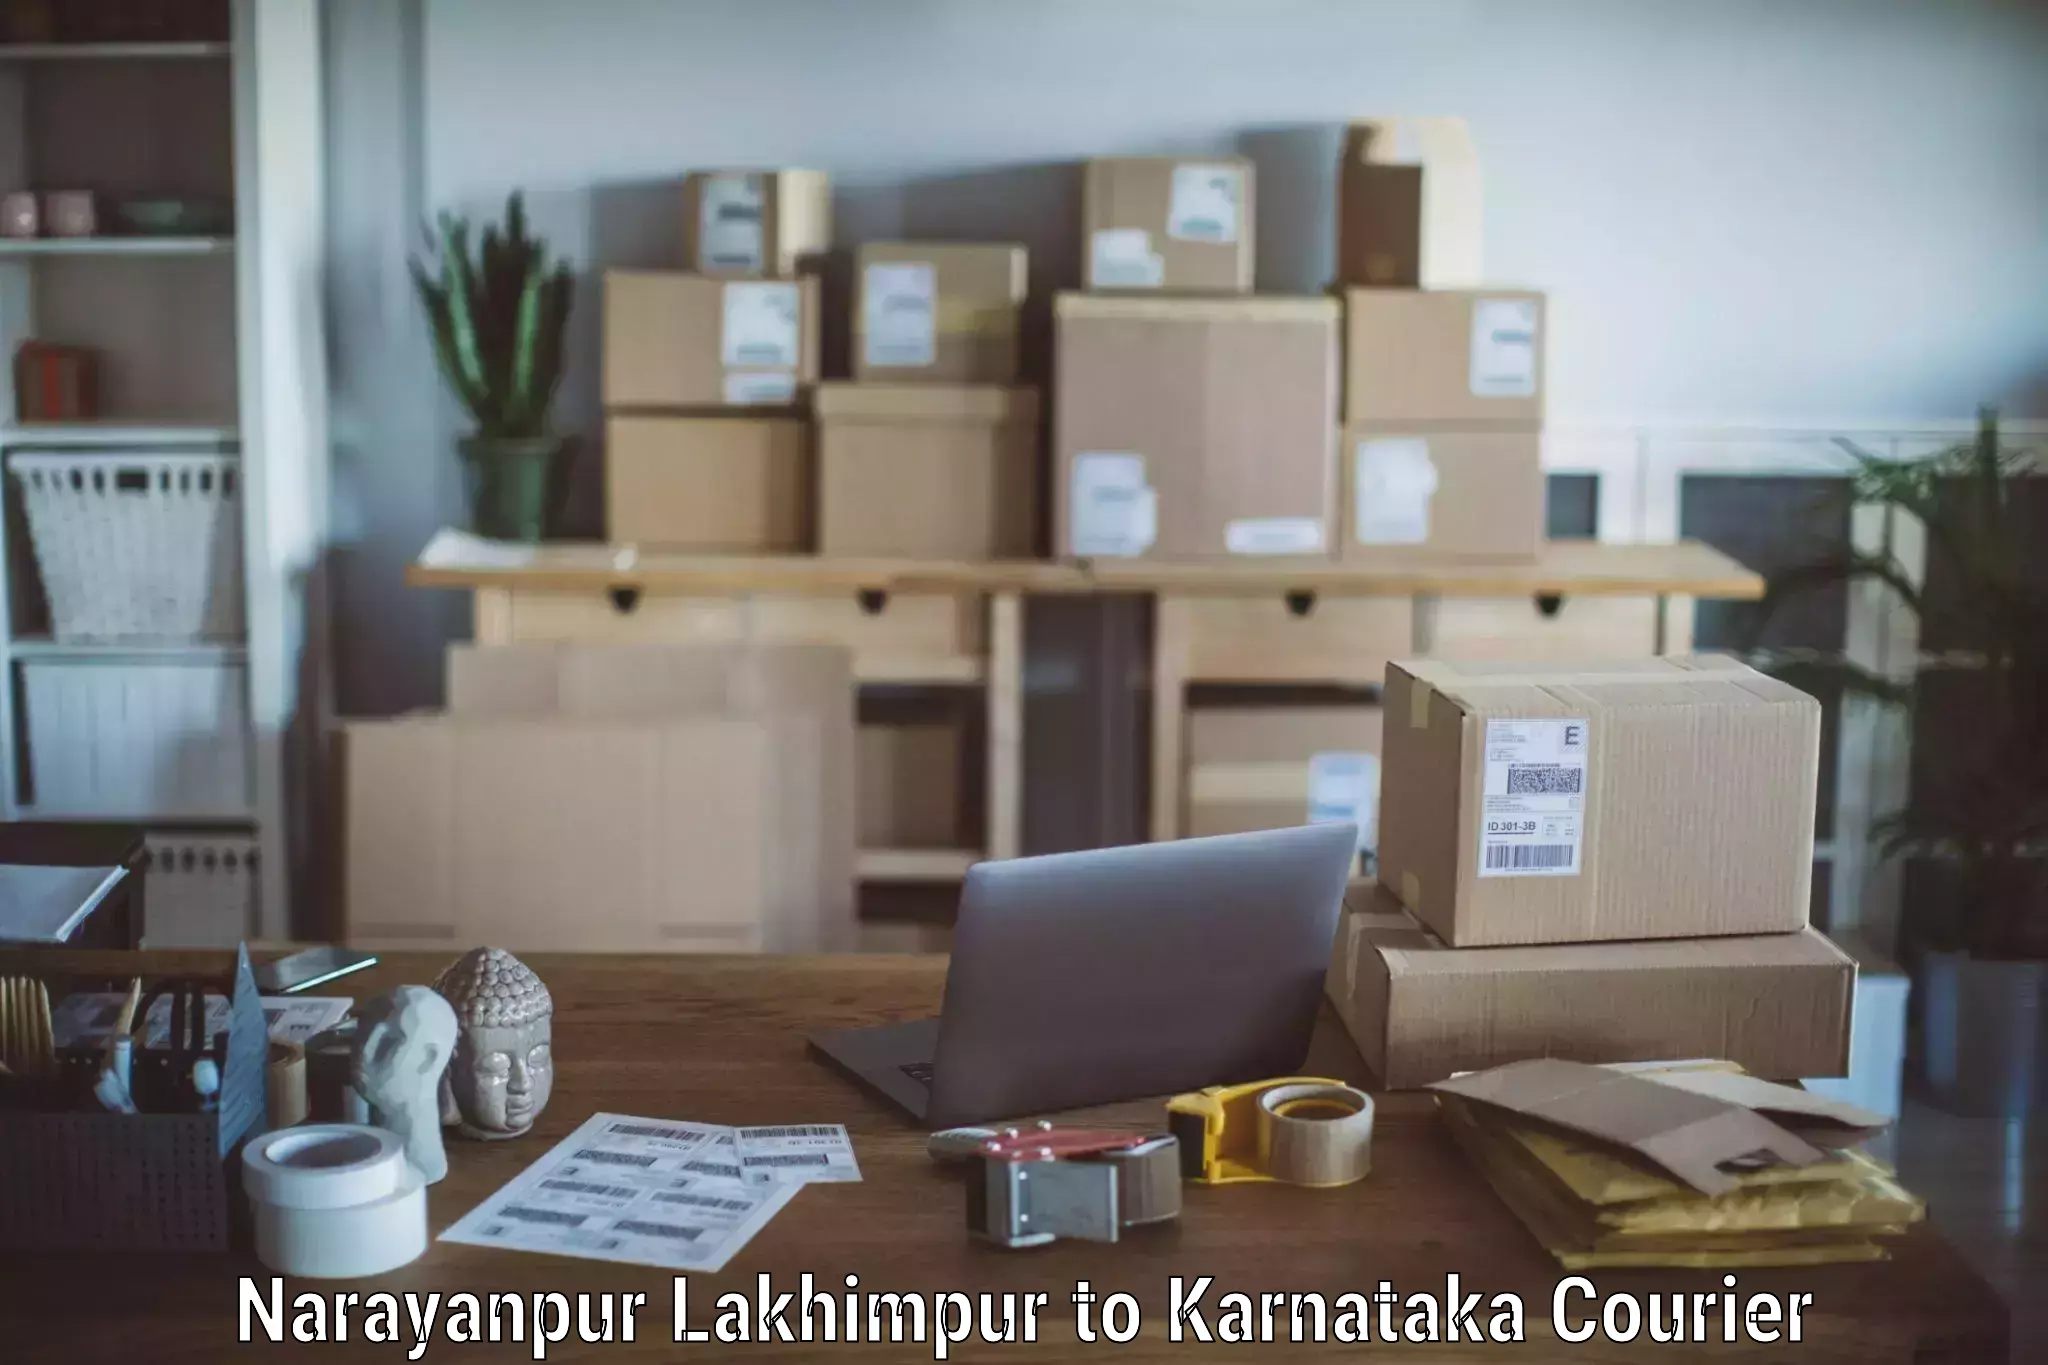 Professional moving company Narayanpur Lakhimpur to Shikaripur